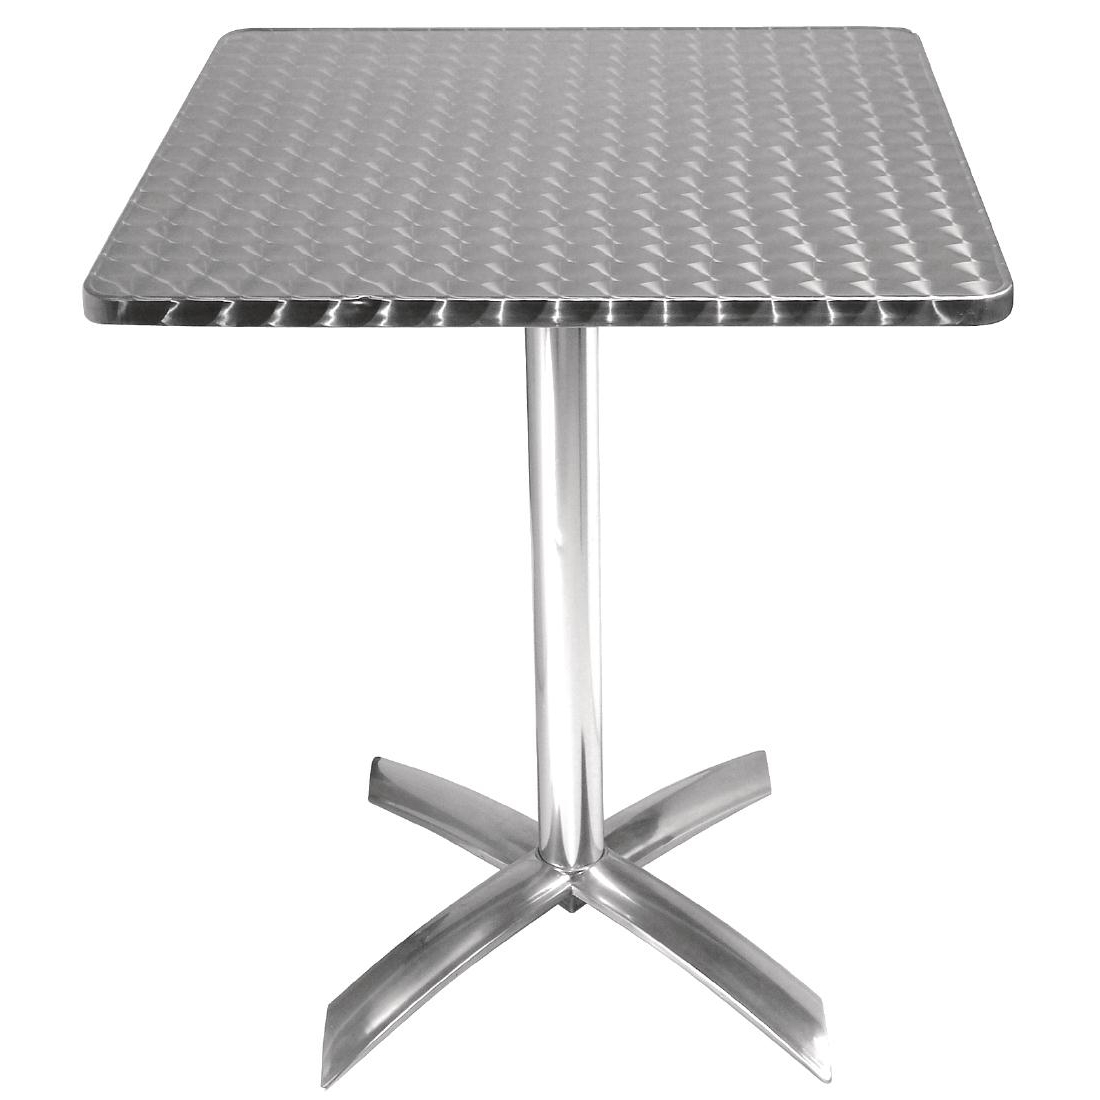 Bolero Square Flip-Top Table Stainless Steel 600mm